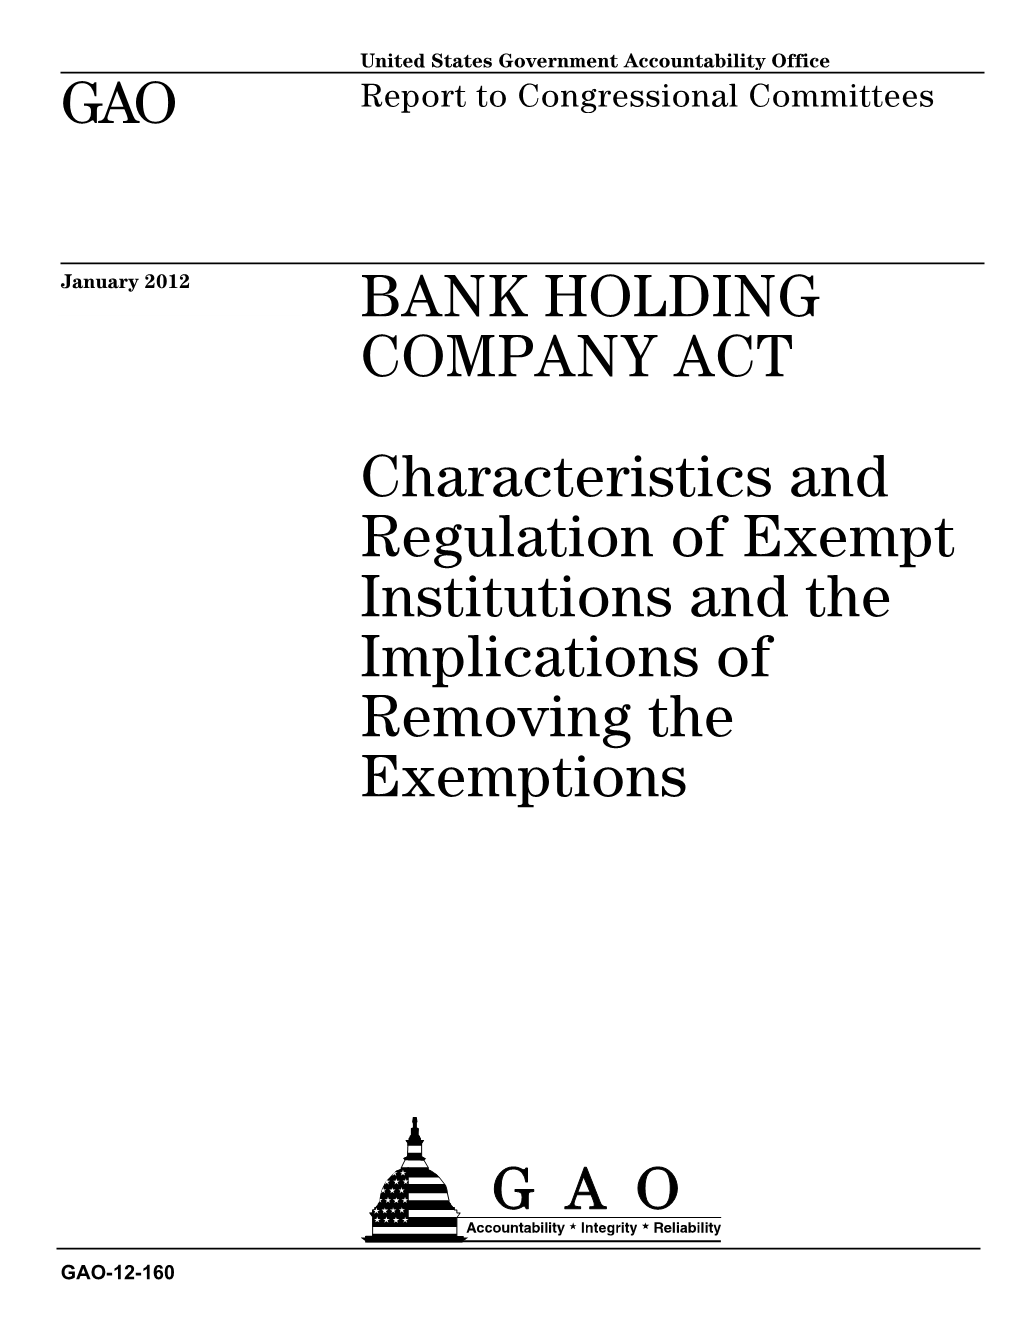 GAO-12-160 Bank Holding Company Act